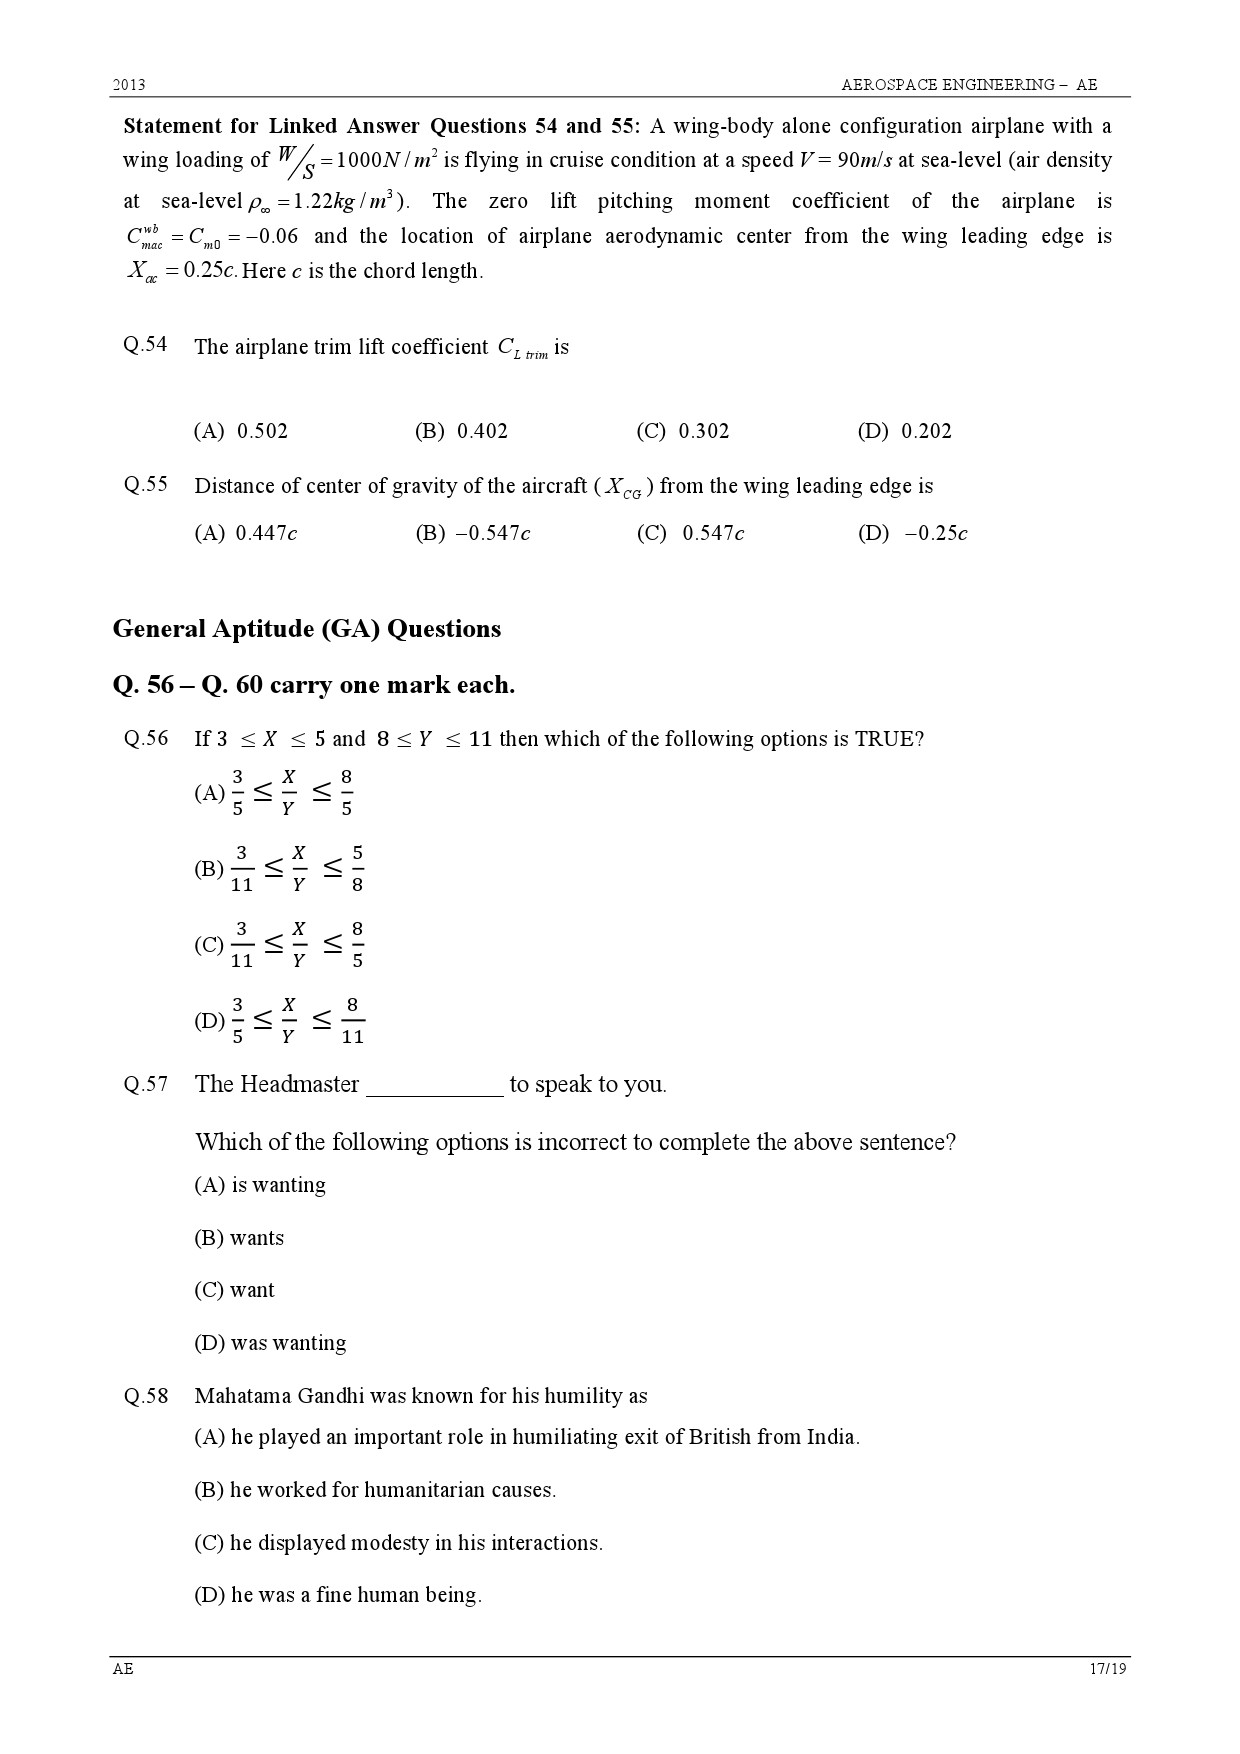 GATE Exam 2013 Aerospace Engineering Question Paper 17